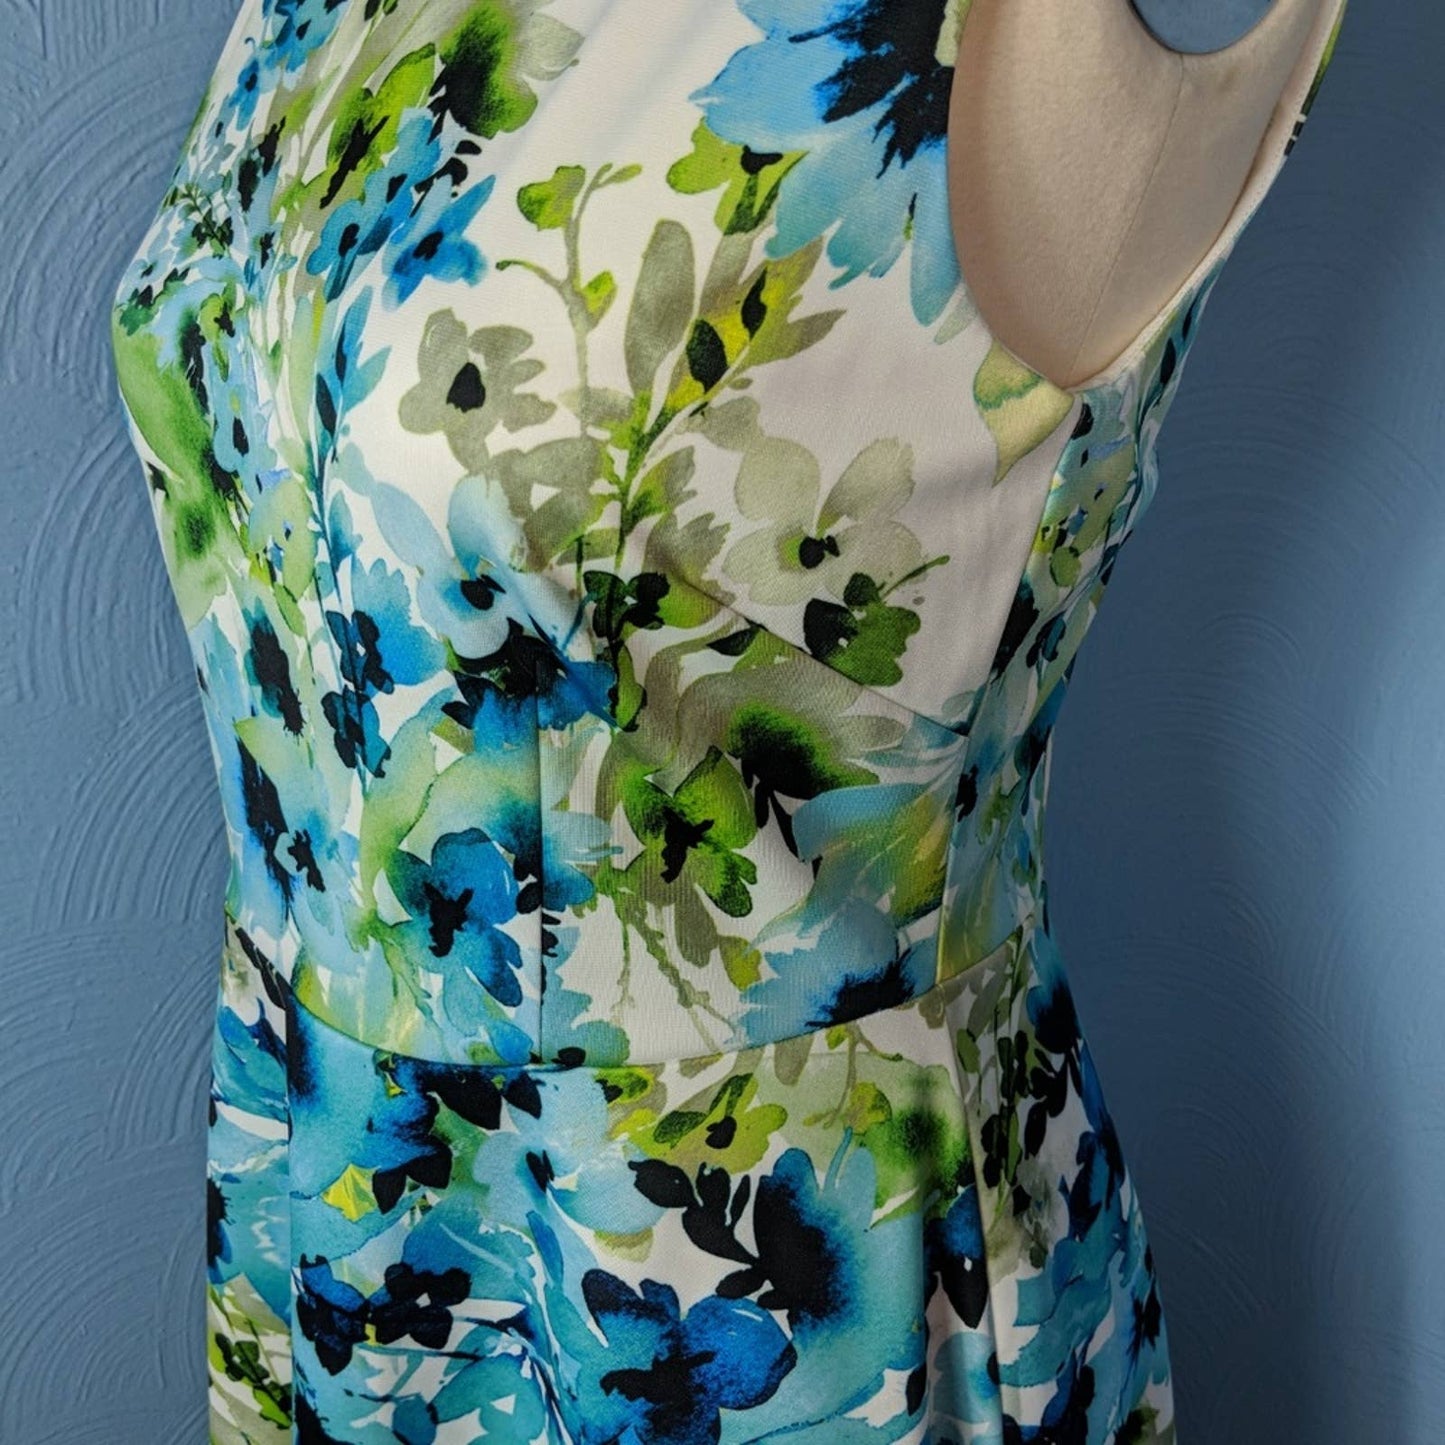 ALEX MARIE NEW Floral Blue Asymmetrical Dress 8